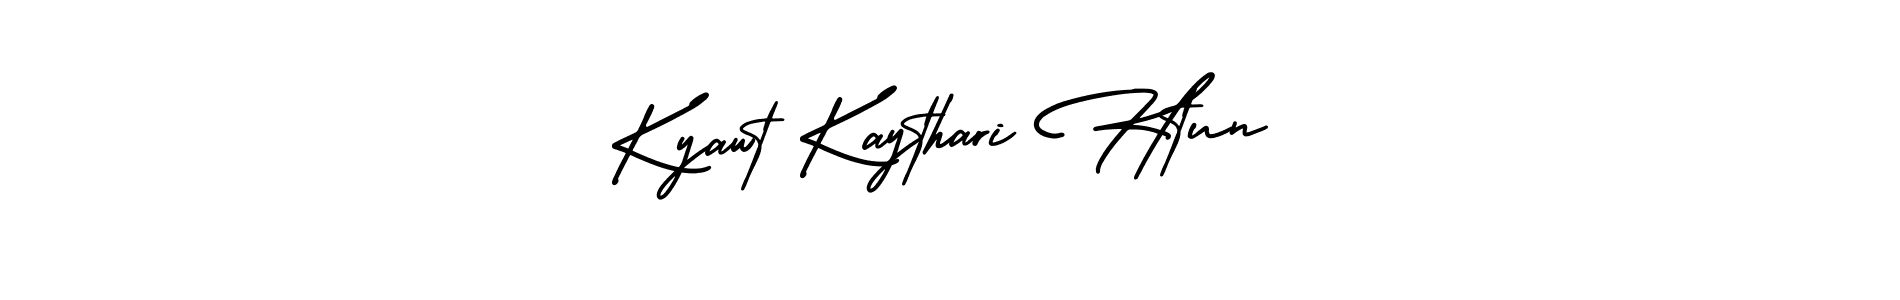 How to Draw Kyawt Kaythari Htun signature style? AmerikaSignatureDemo-Regular is a latest design signature styles for name Kyawt Kaythari Htun. Kyawt Kaythari Htun signature style 3 images and pictures png